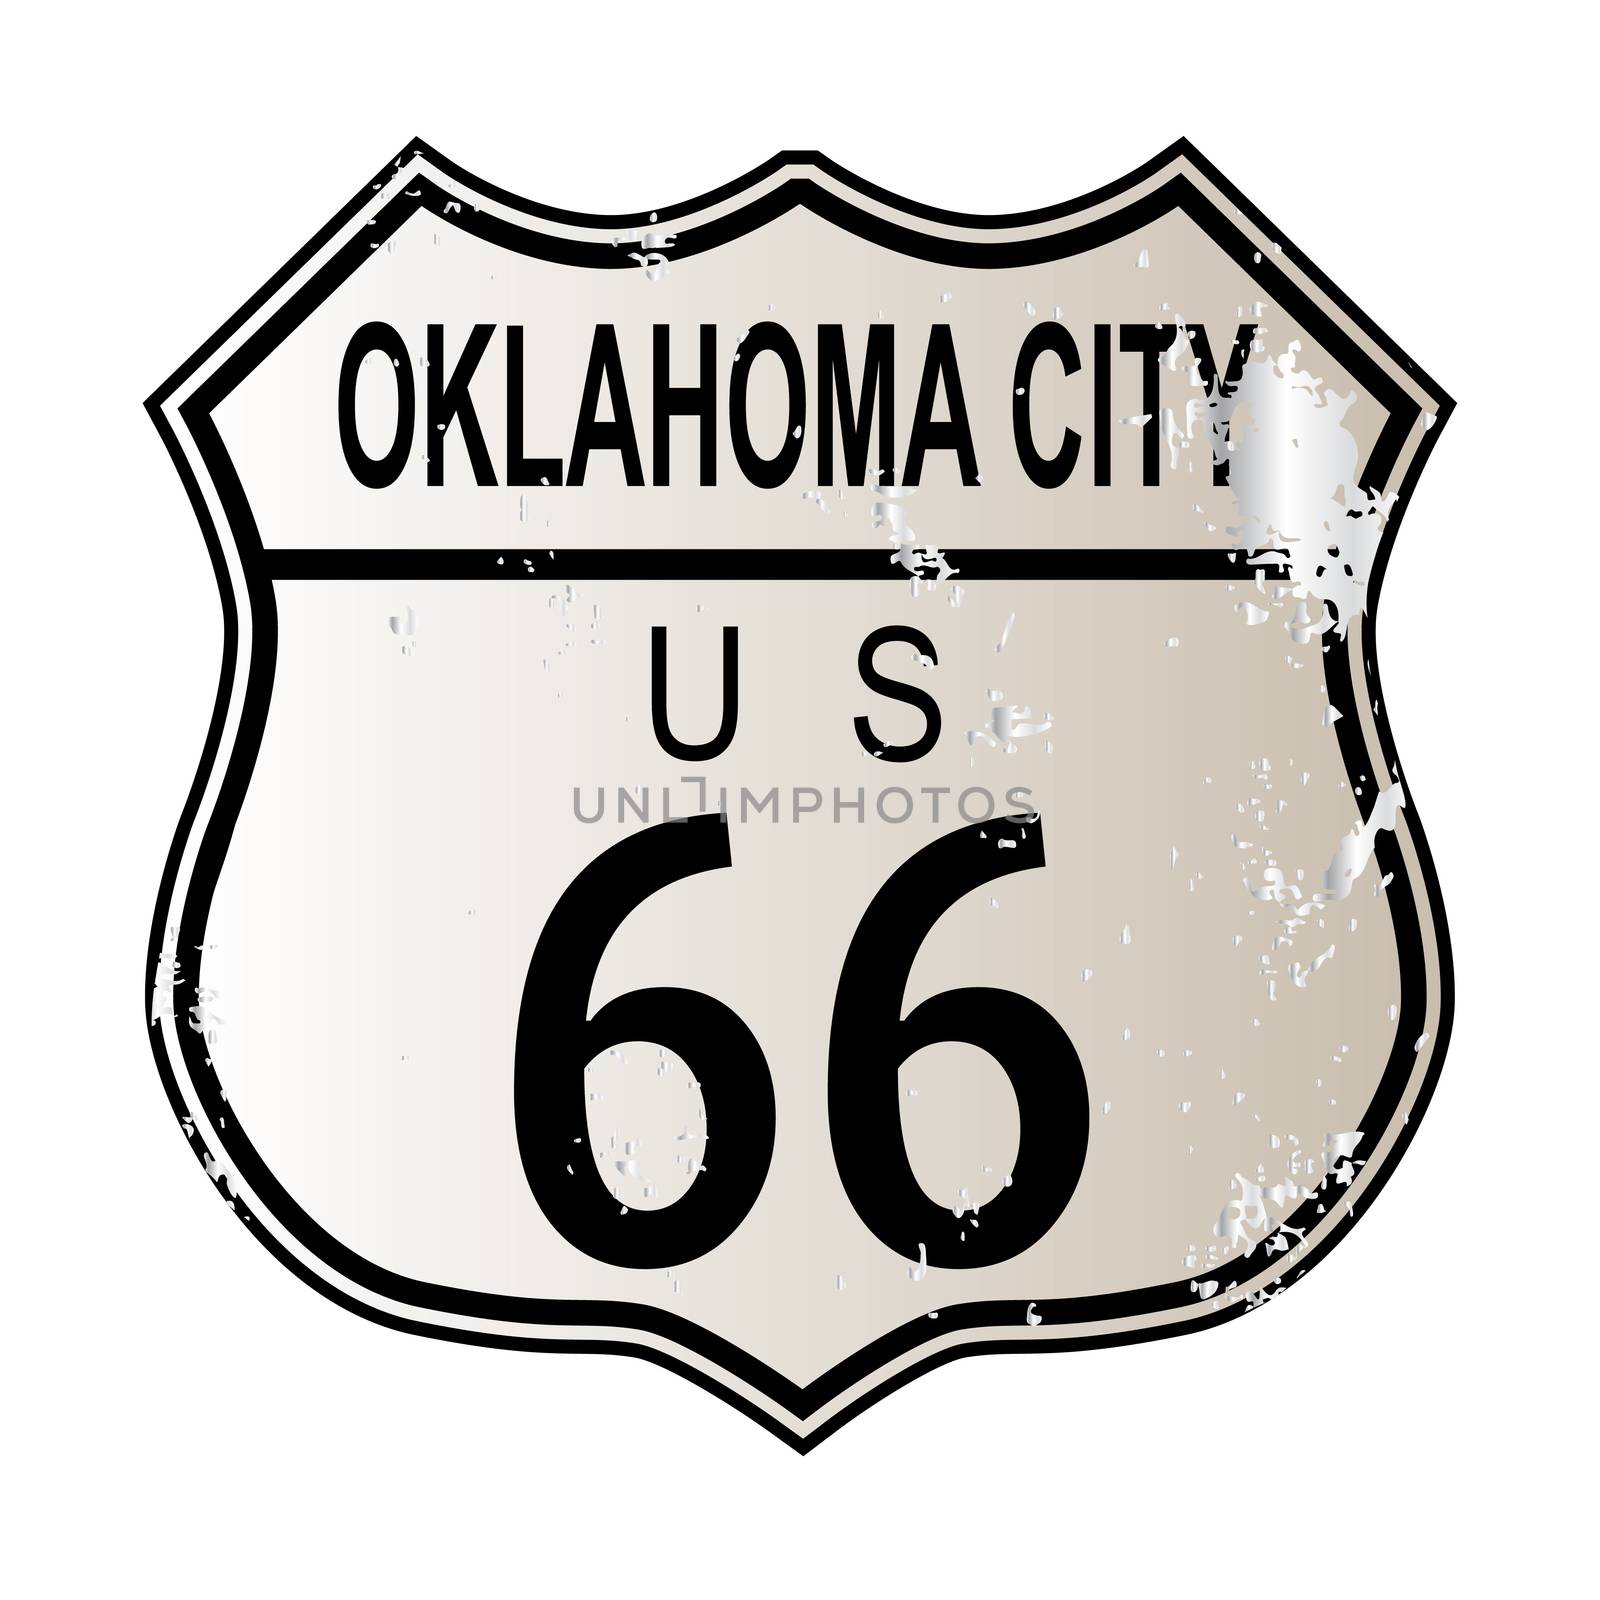 Oklahoma City Route 66 Sign by Bigalbaloo